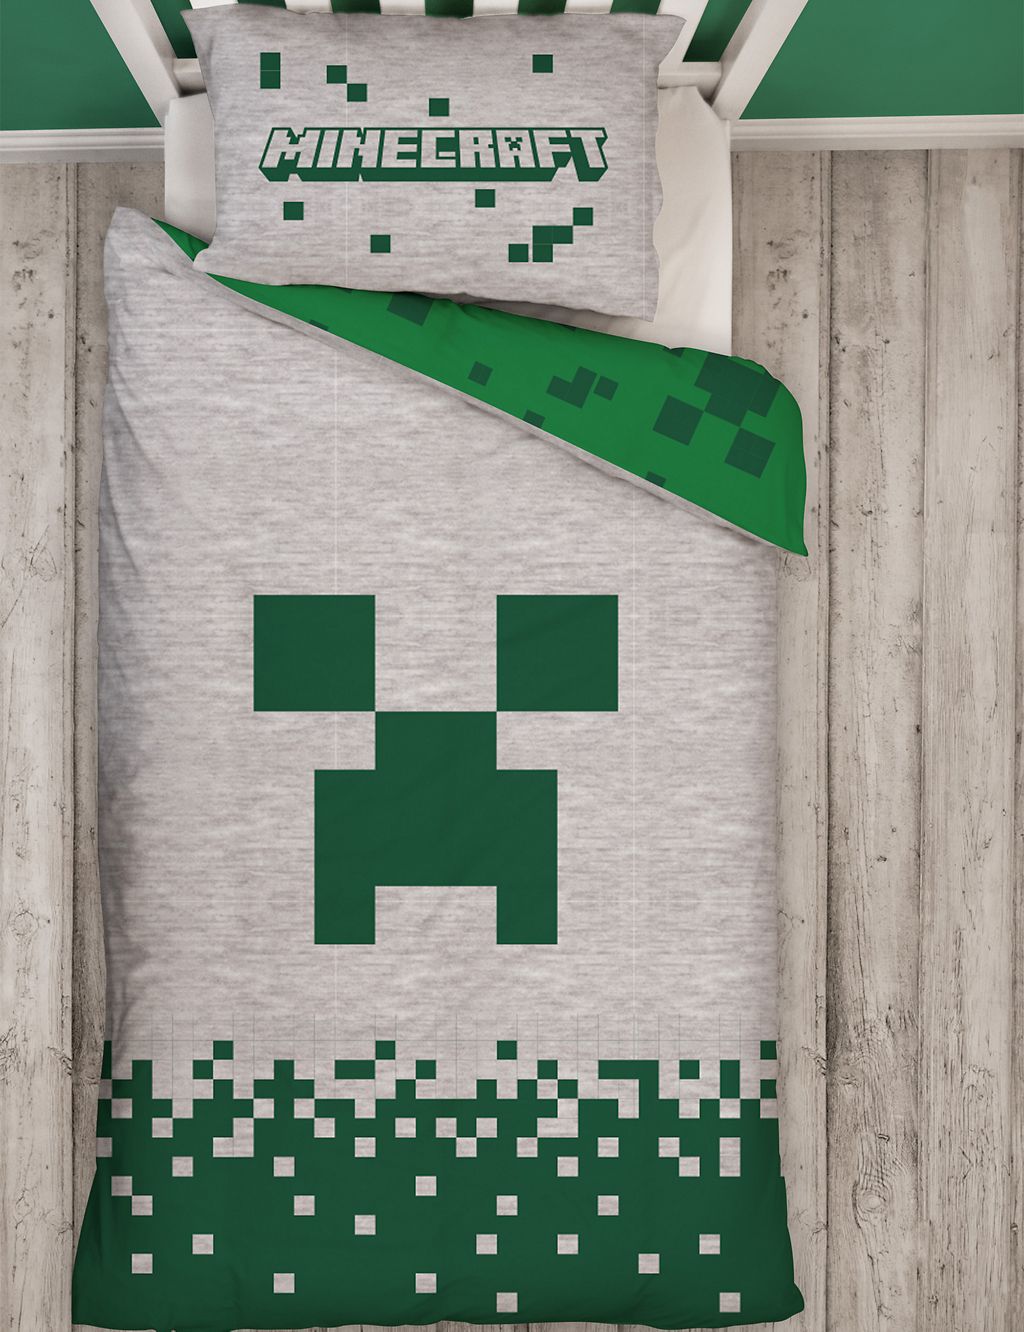 Minecraft™ Cotton Blend Single Bedding Set 4 of 7